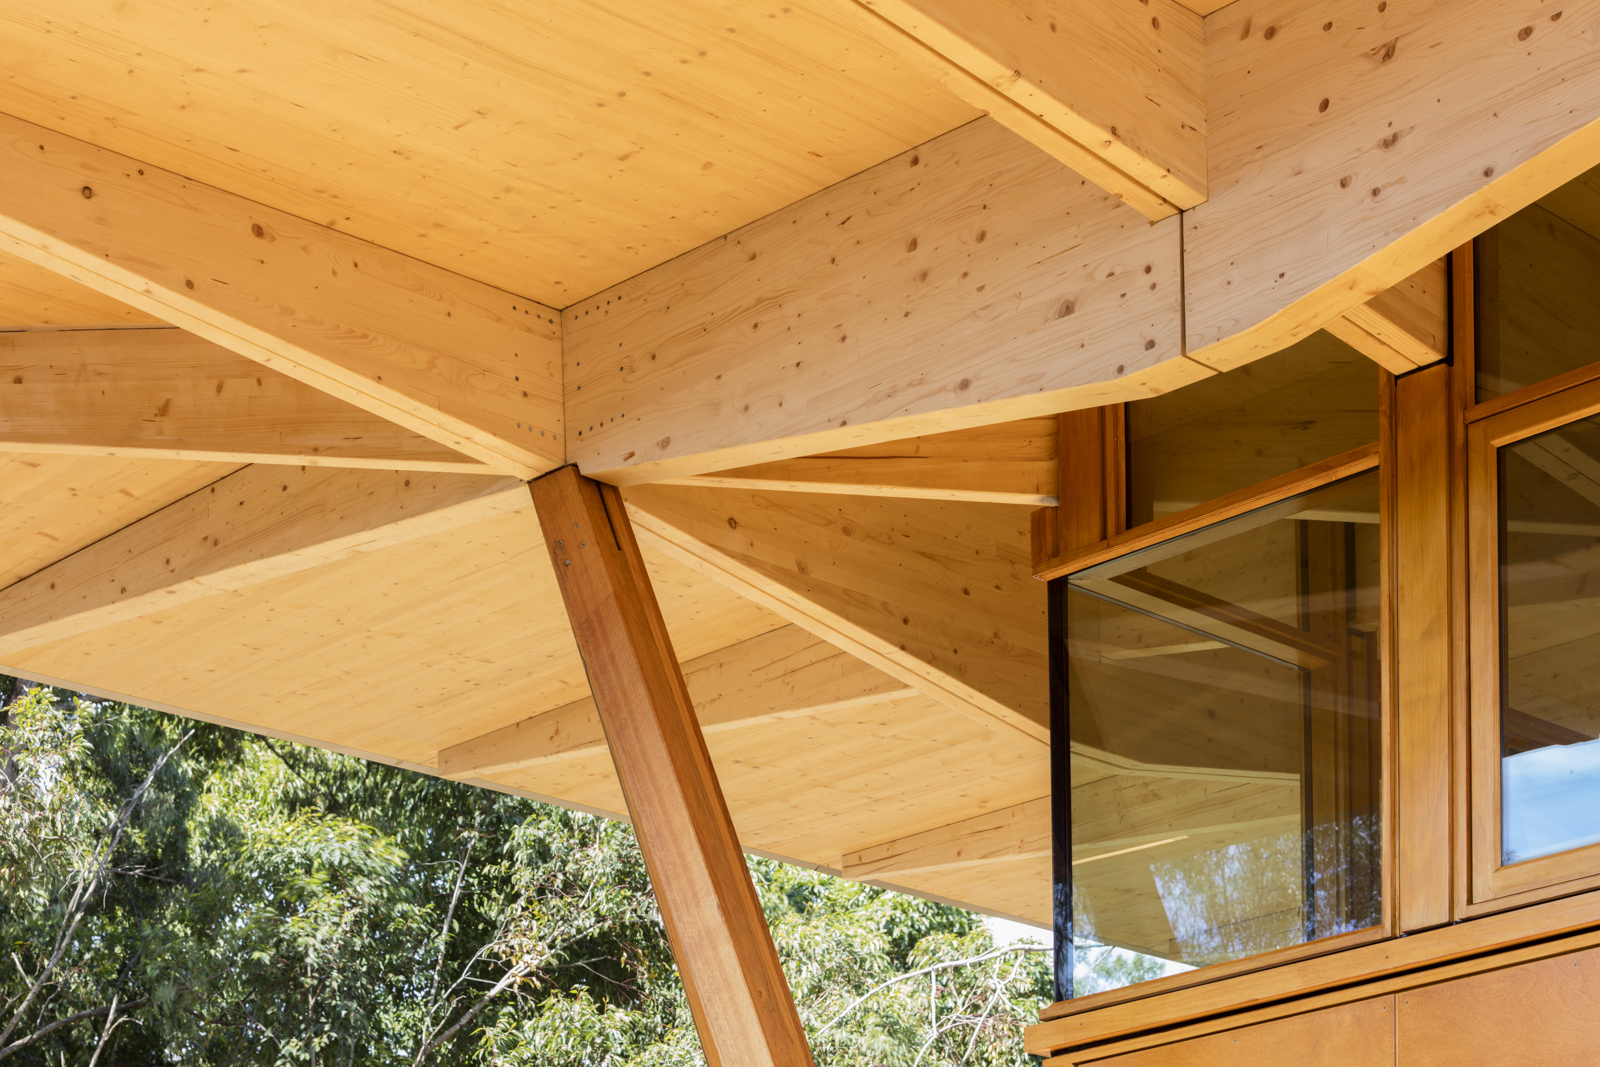 The Macquarie University Incubator wins Green Good Design 2018 award | Tertiary architecture